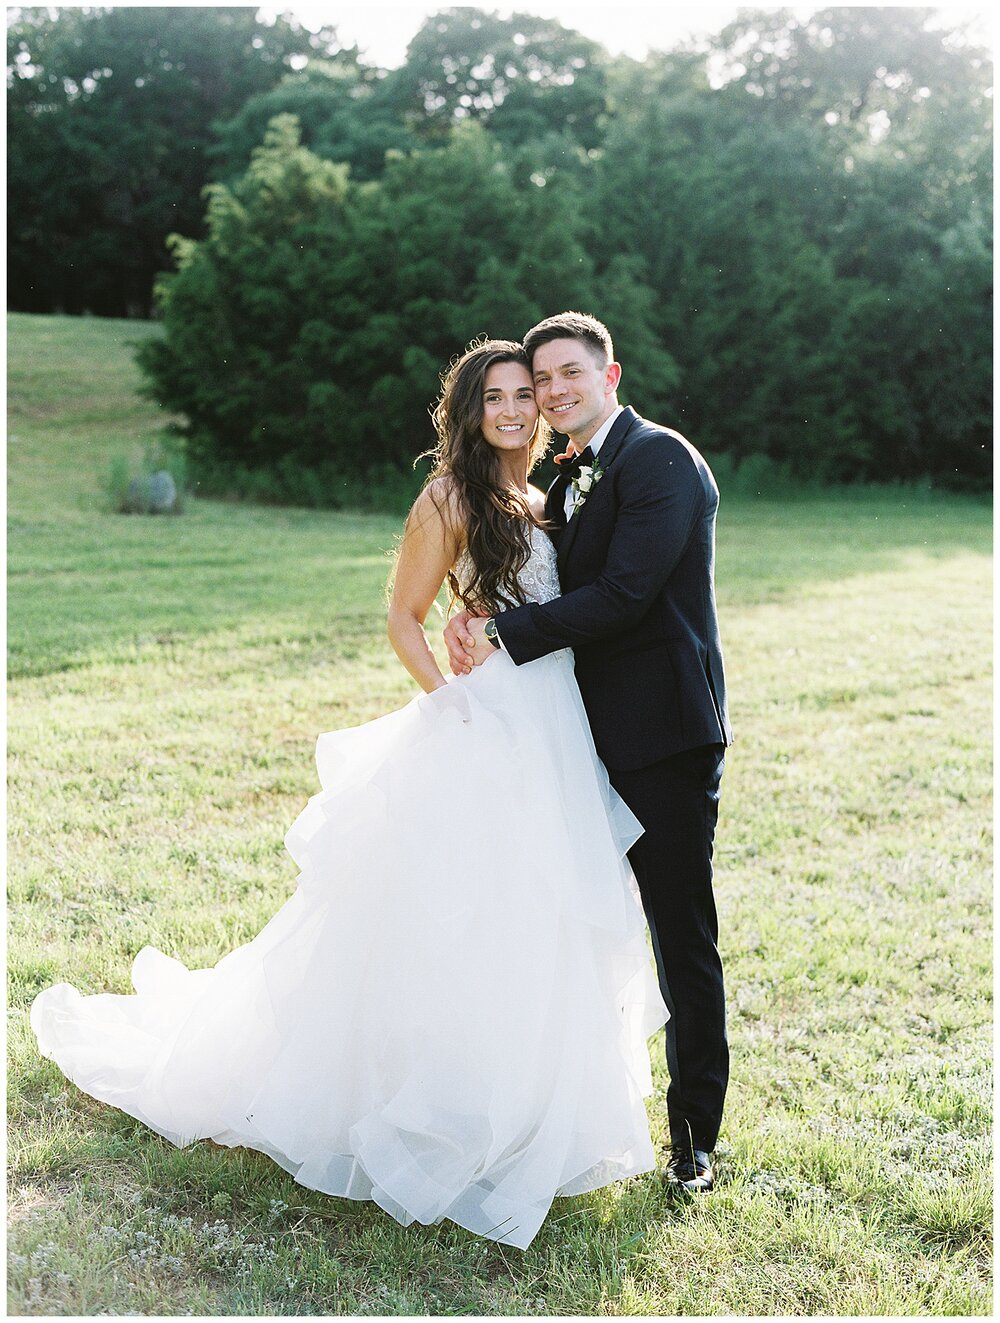 Kendall Point - Boerne TX Wedding Photography37.jpg